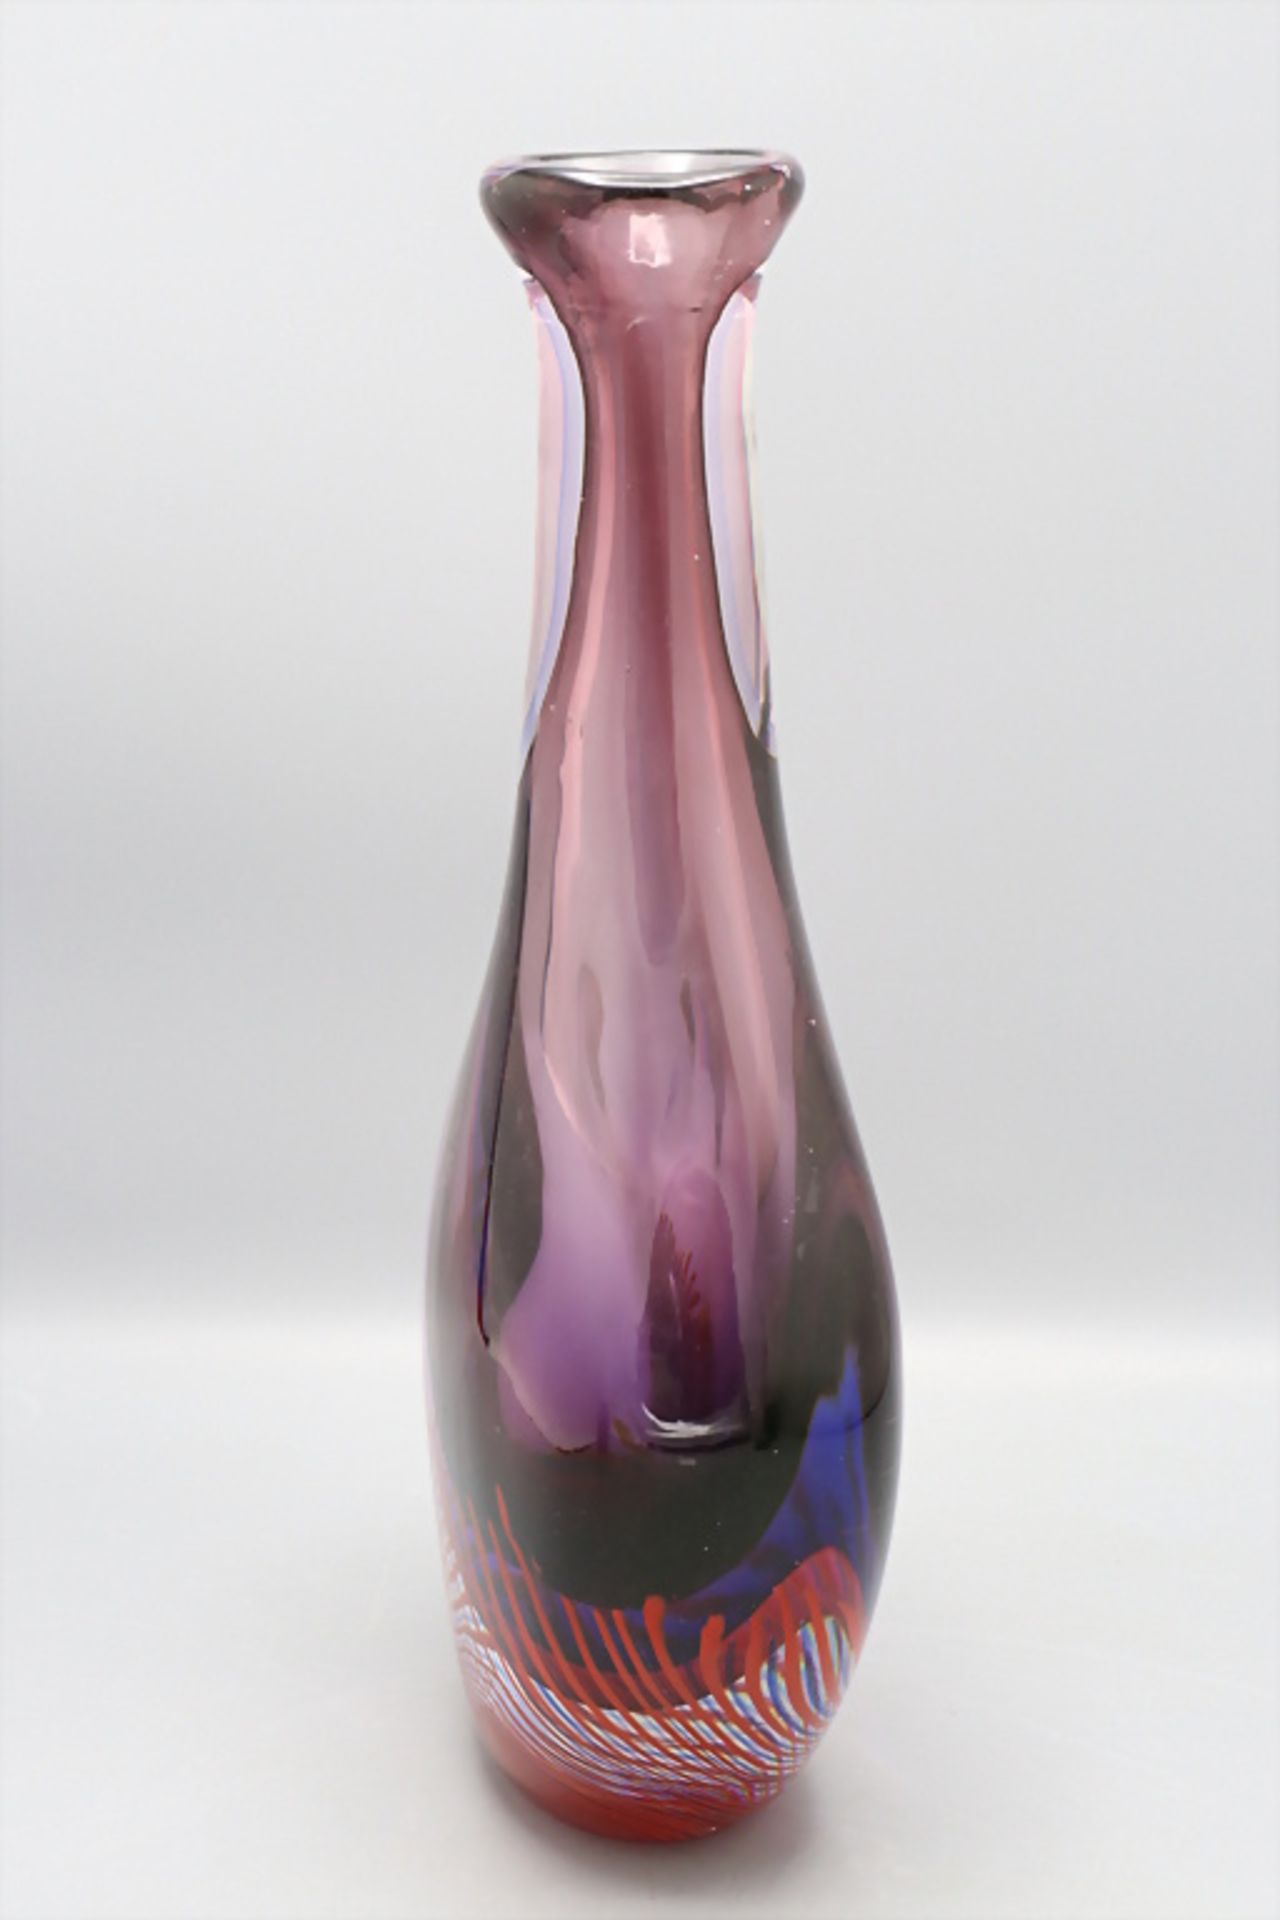 Glasziervase / A decorative glass vase 'Sommerso', Flavio Poli, Murano, 1960er Jahre - Image 2 of 6